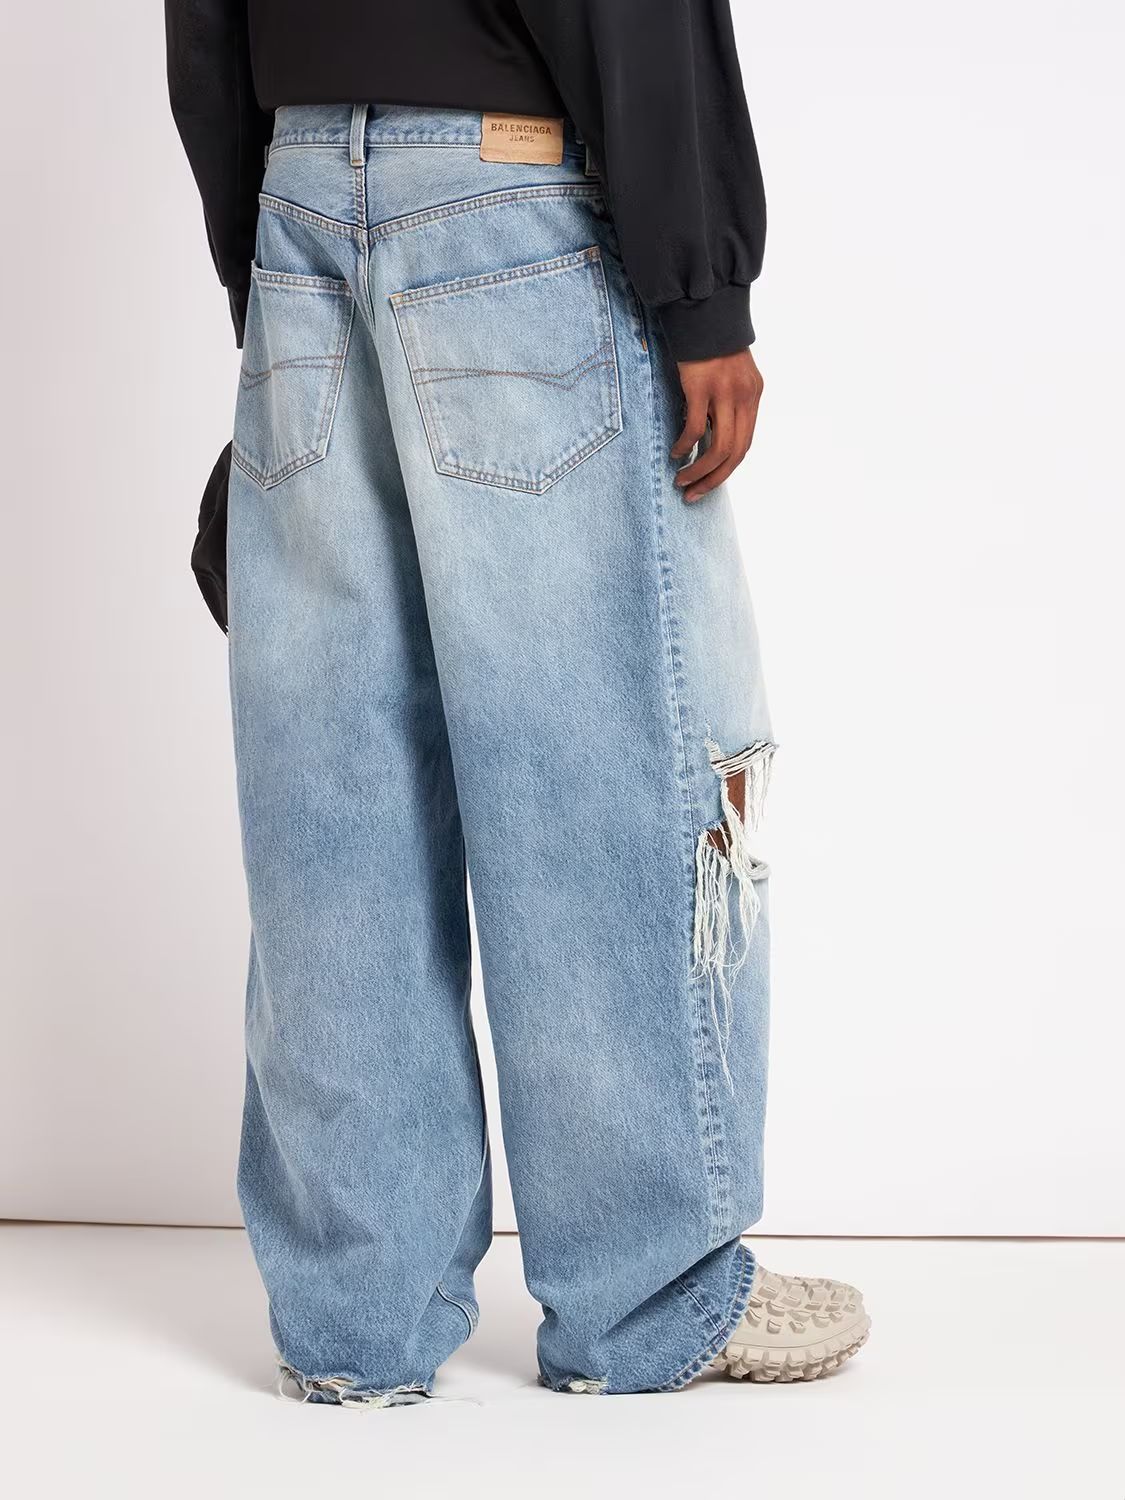 The Super-Baggy Jeans – Men’s Top Denim Trend RN - Denimology